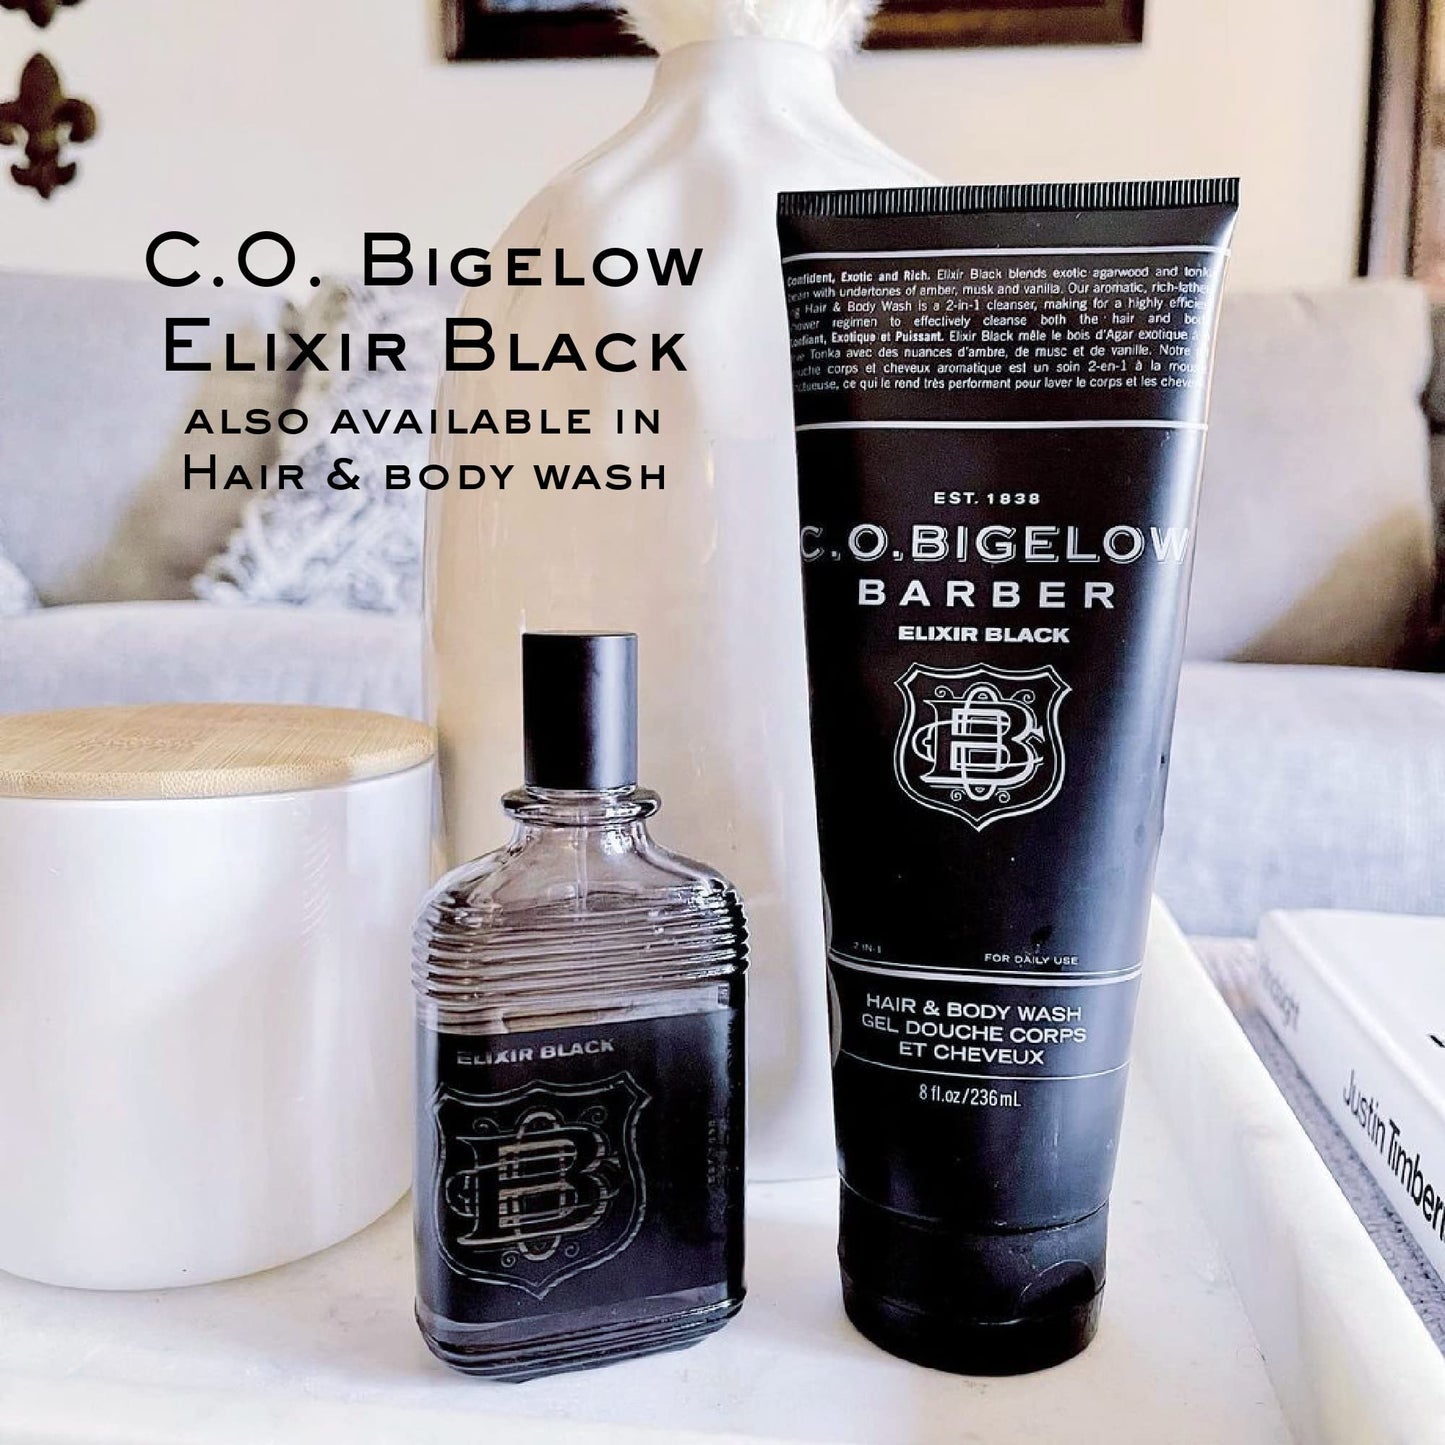 C.O.Bigelow Elixir Black